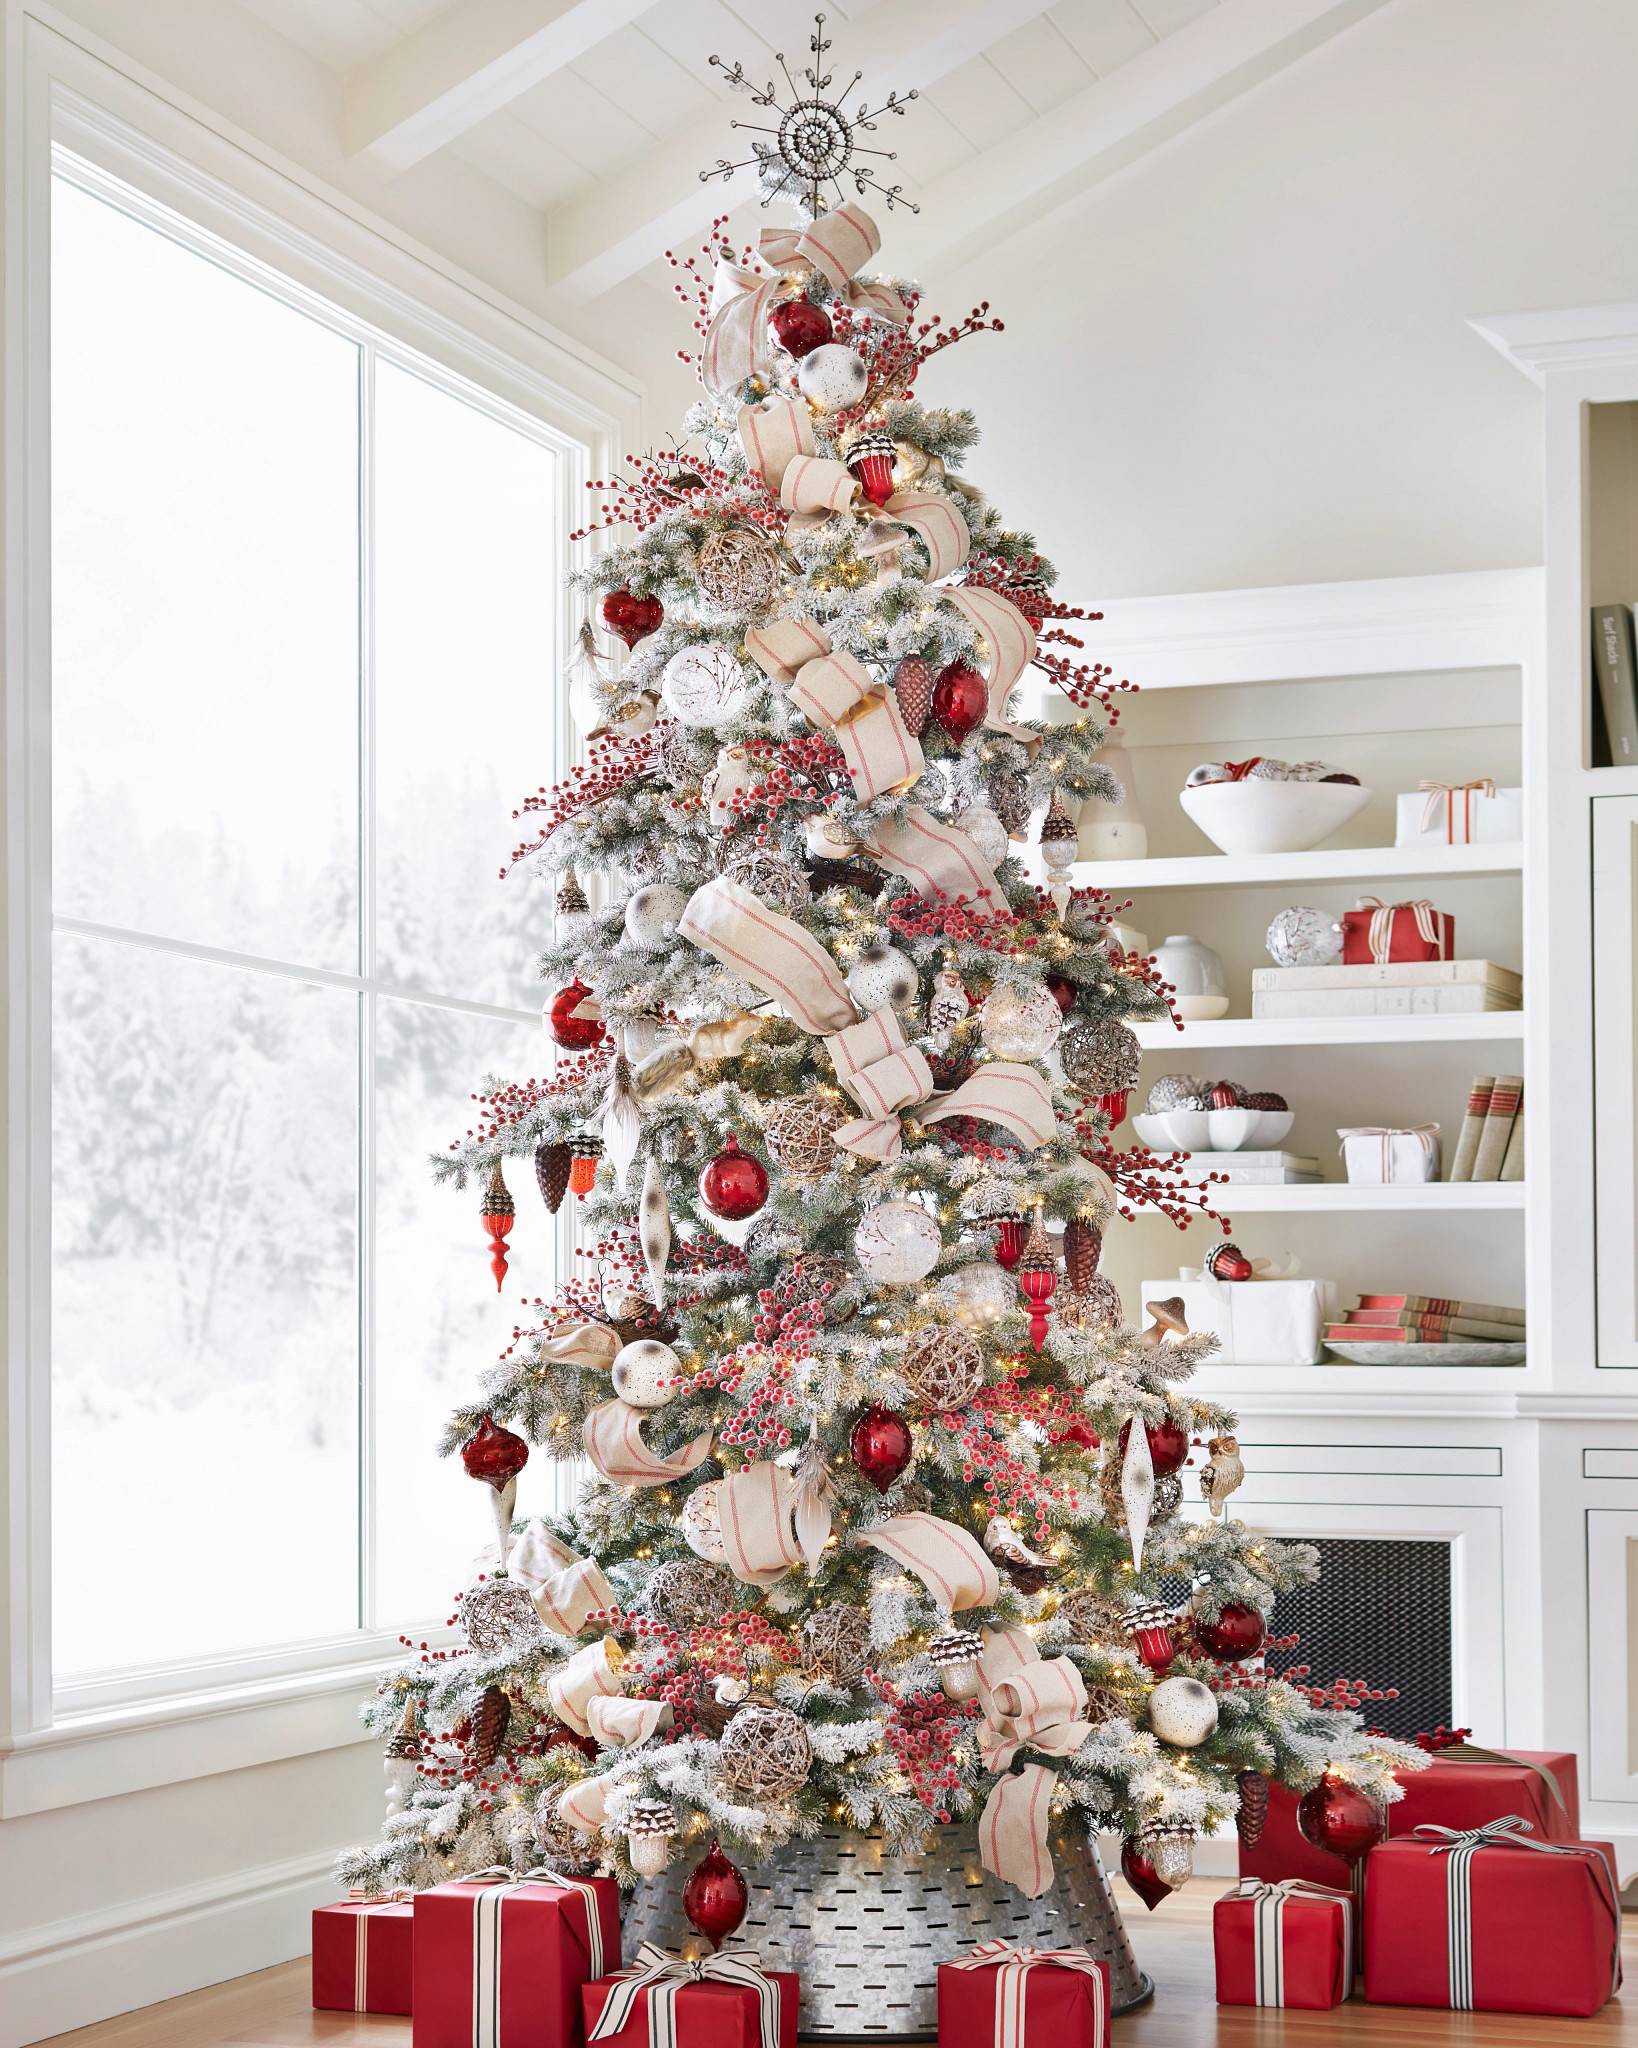 Xmas Gift Idea Women Sweatshirt Tstars Big White Distressed Christmas Tree